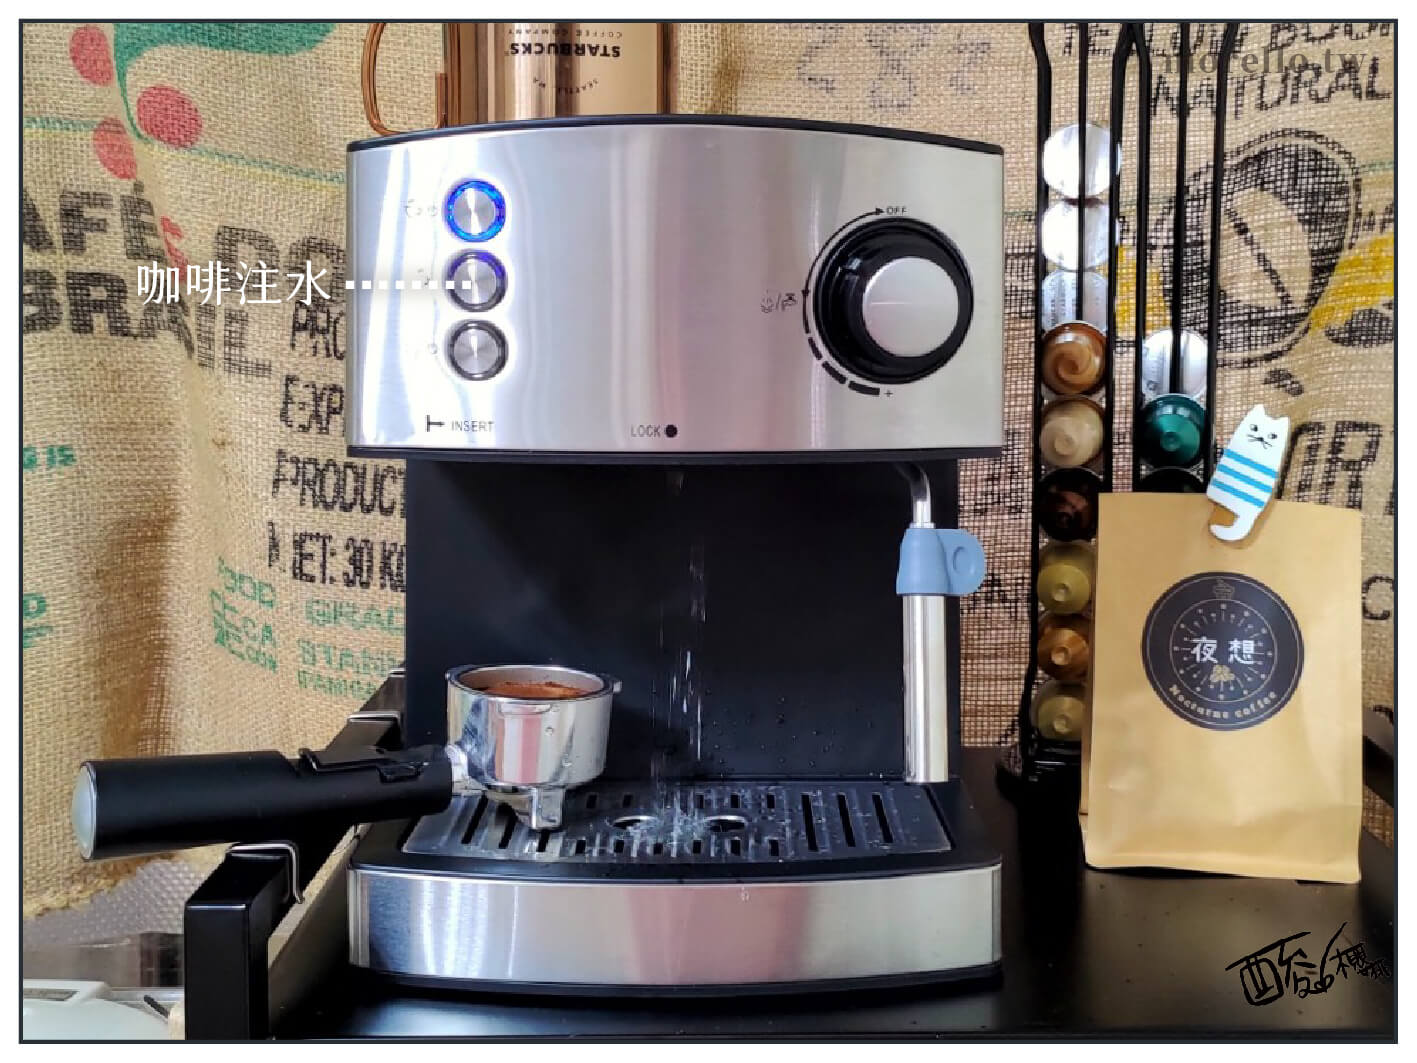 YIRGA CLASSIC 半自動義式咖啡機 製作義式咖啡步驟